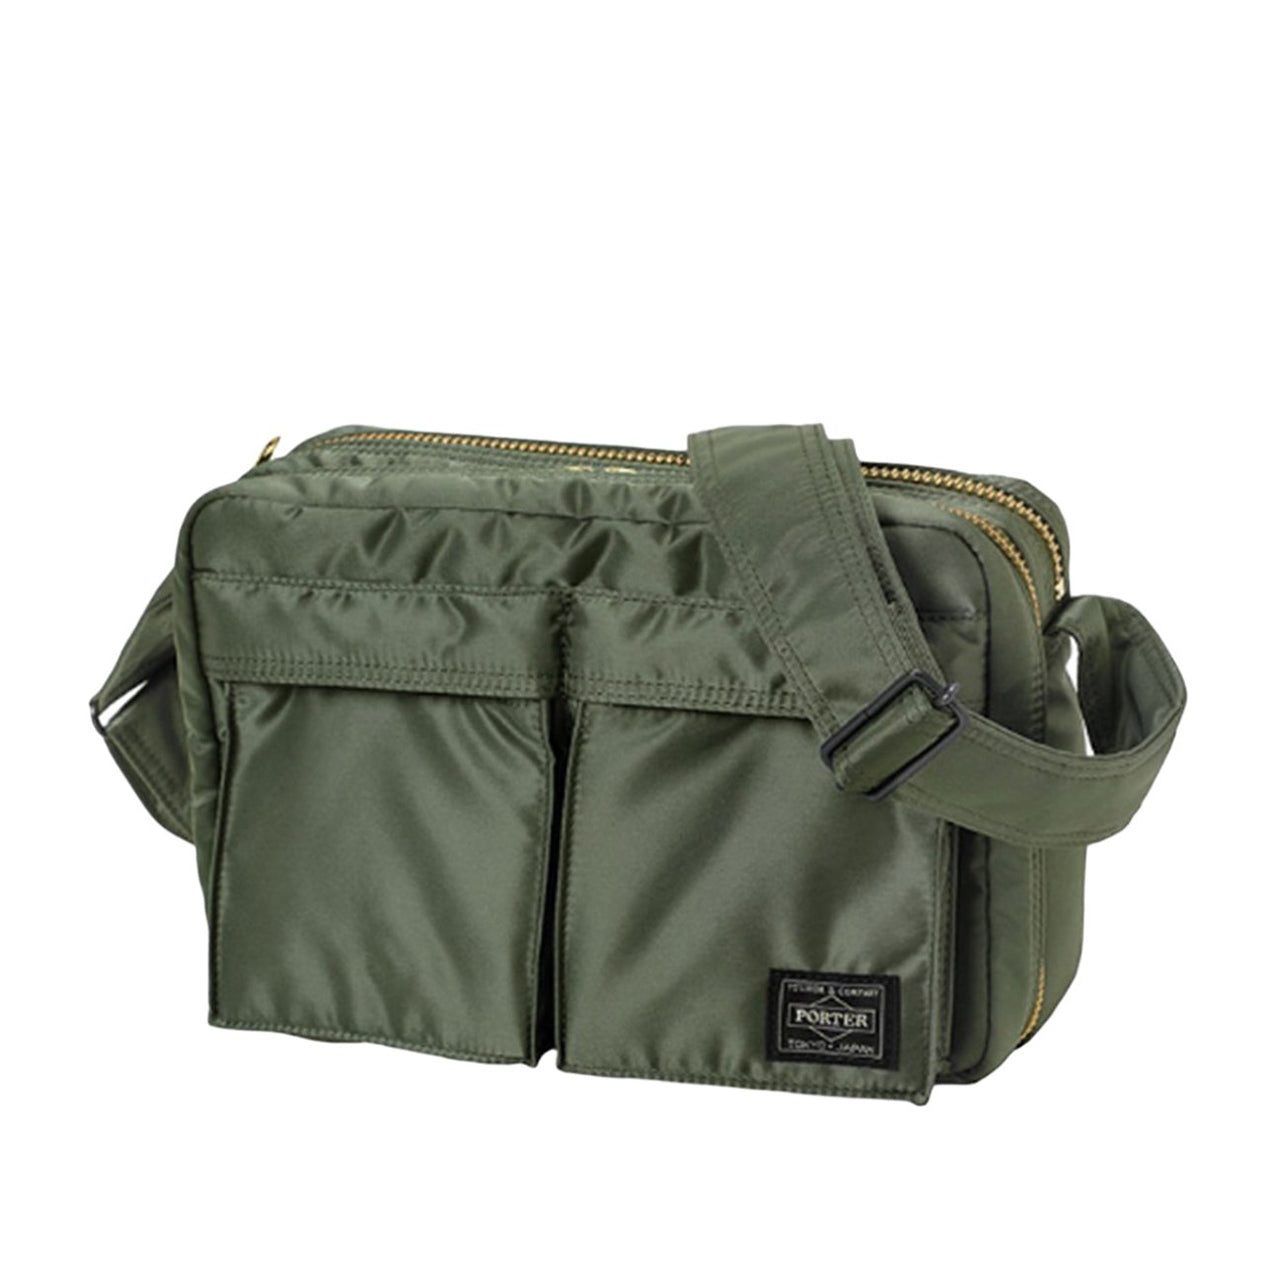 porter-yoshida & co. small tanker shoulder bag (sage green)